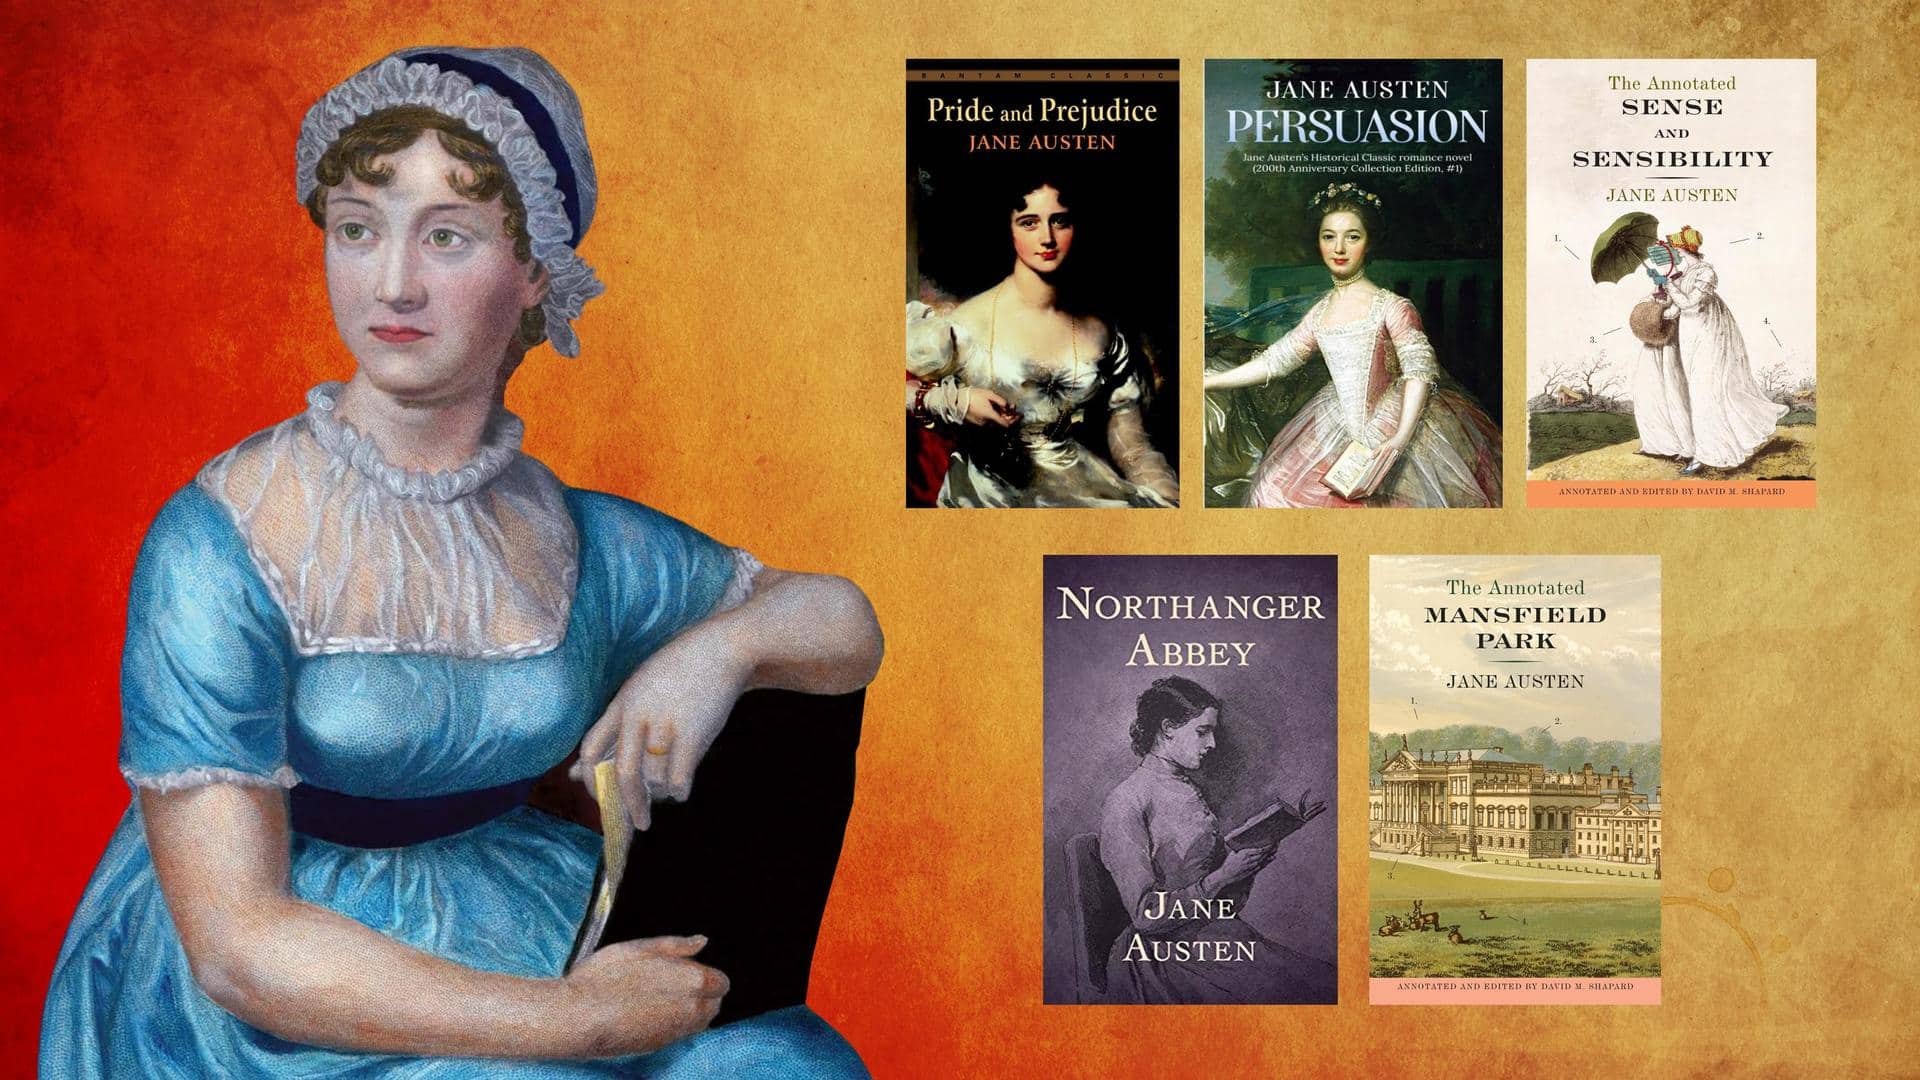 Read these books by Jane Austen on her birth anniversary